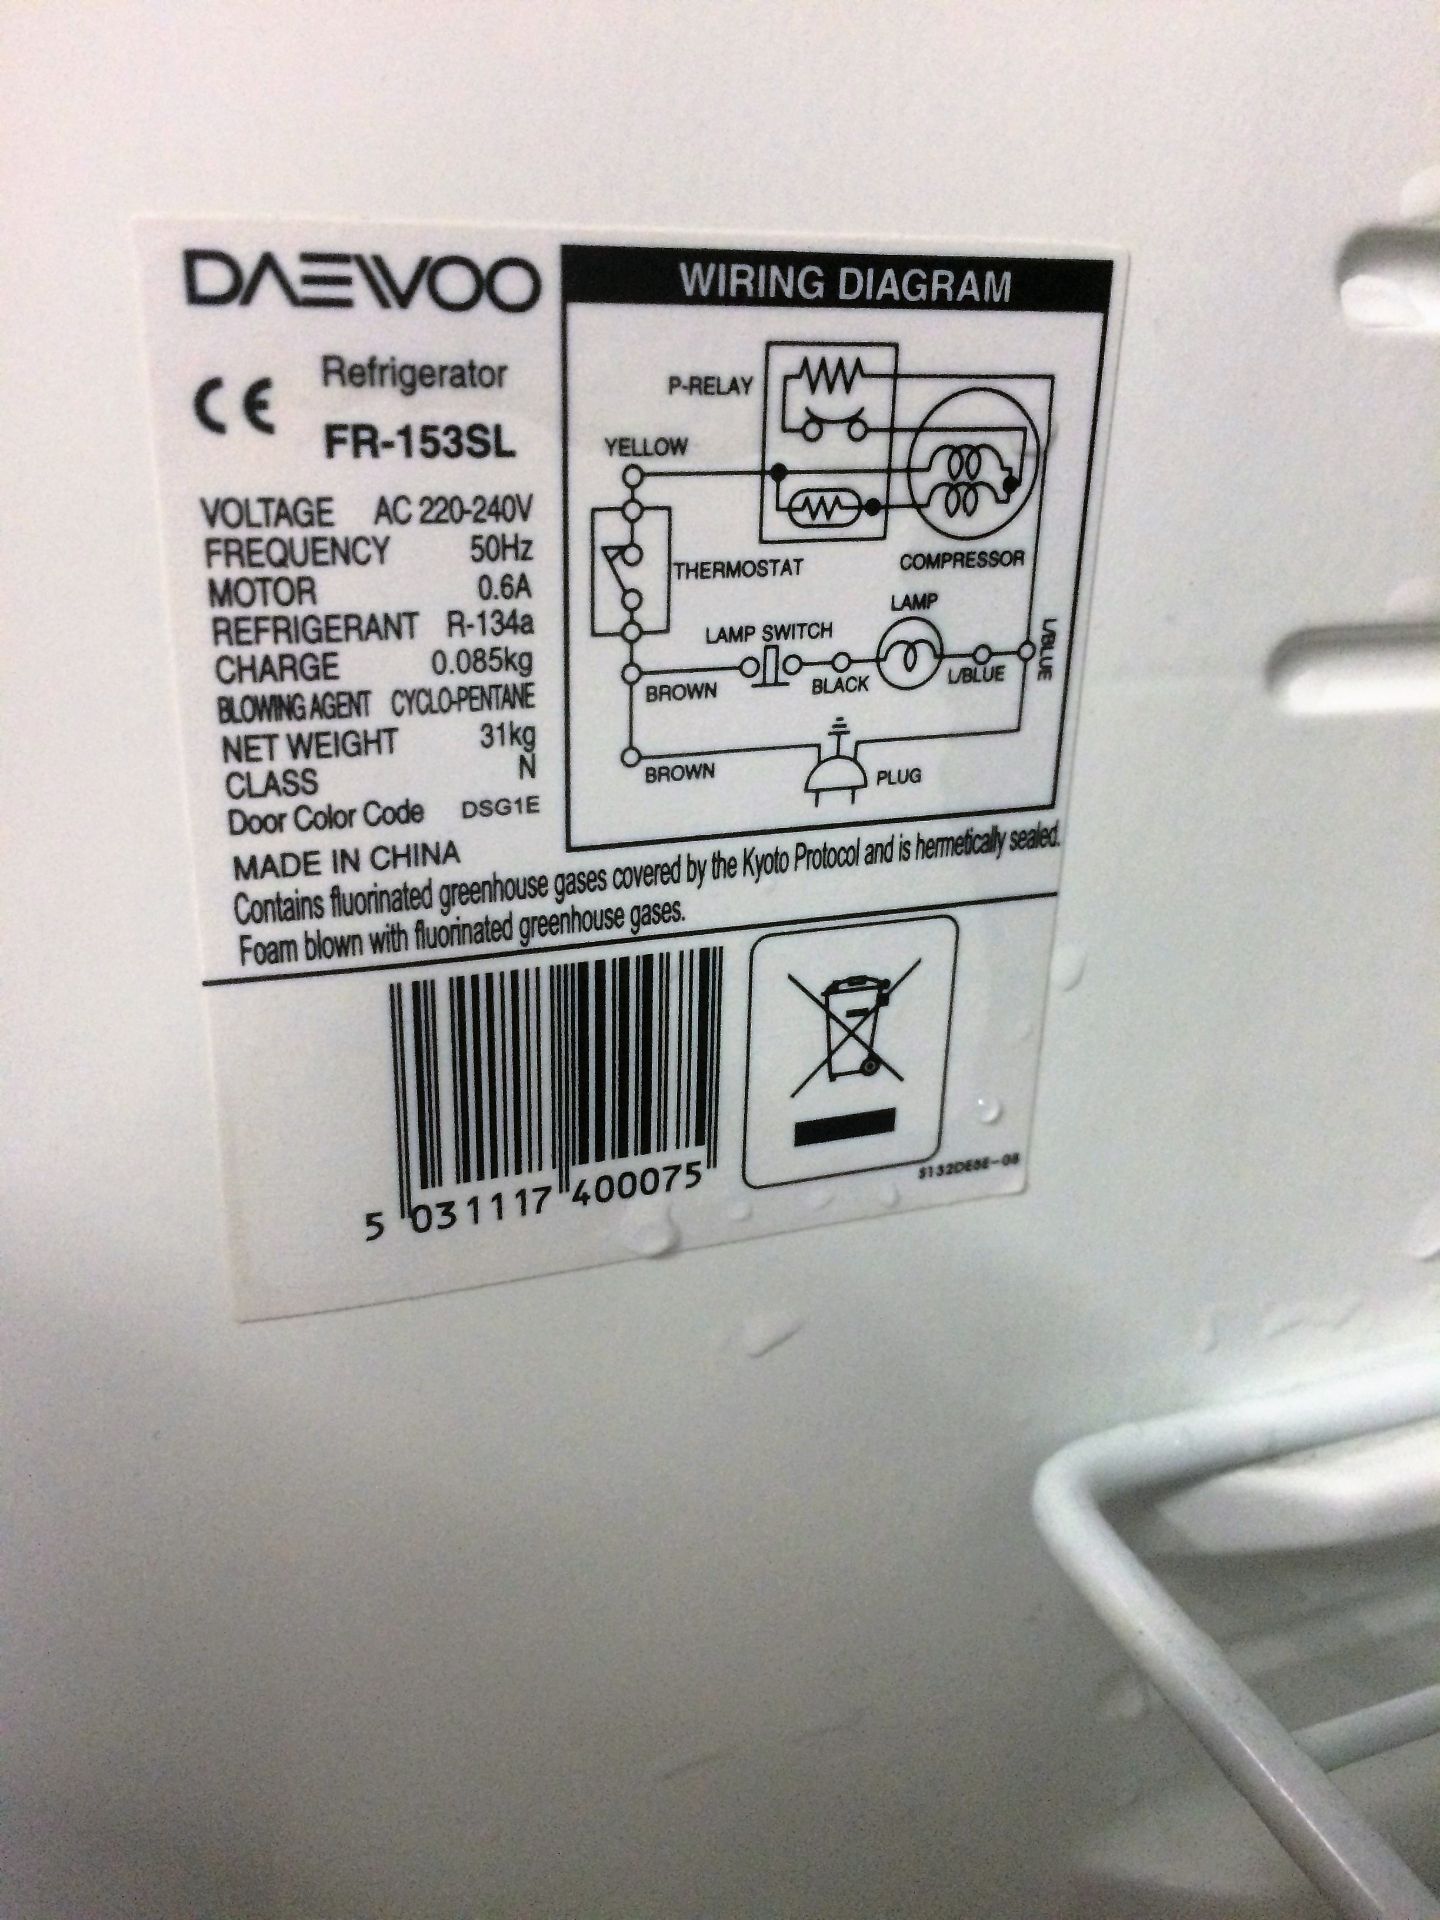 Daewoo Silver Refrigerator - Model: FR-153SL - Image 4 of 4